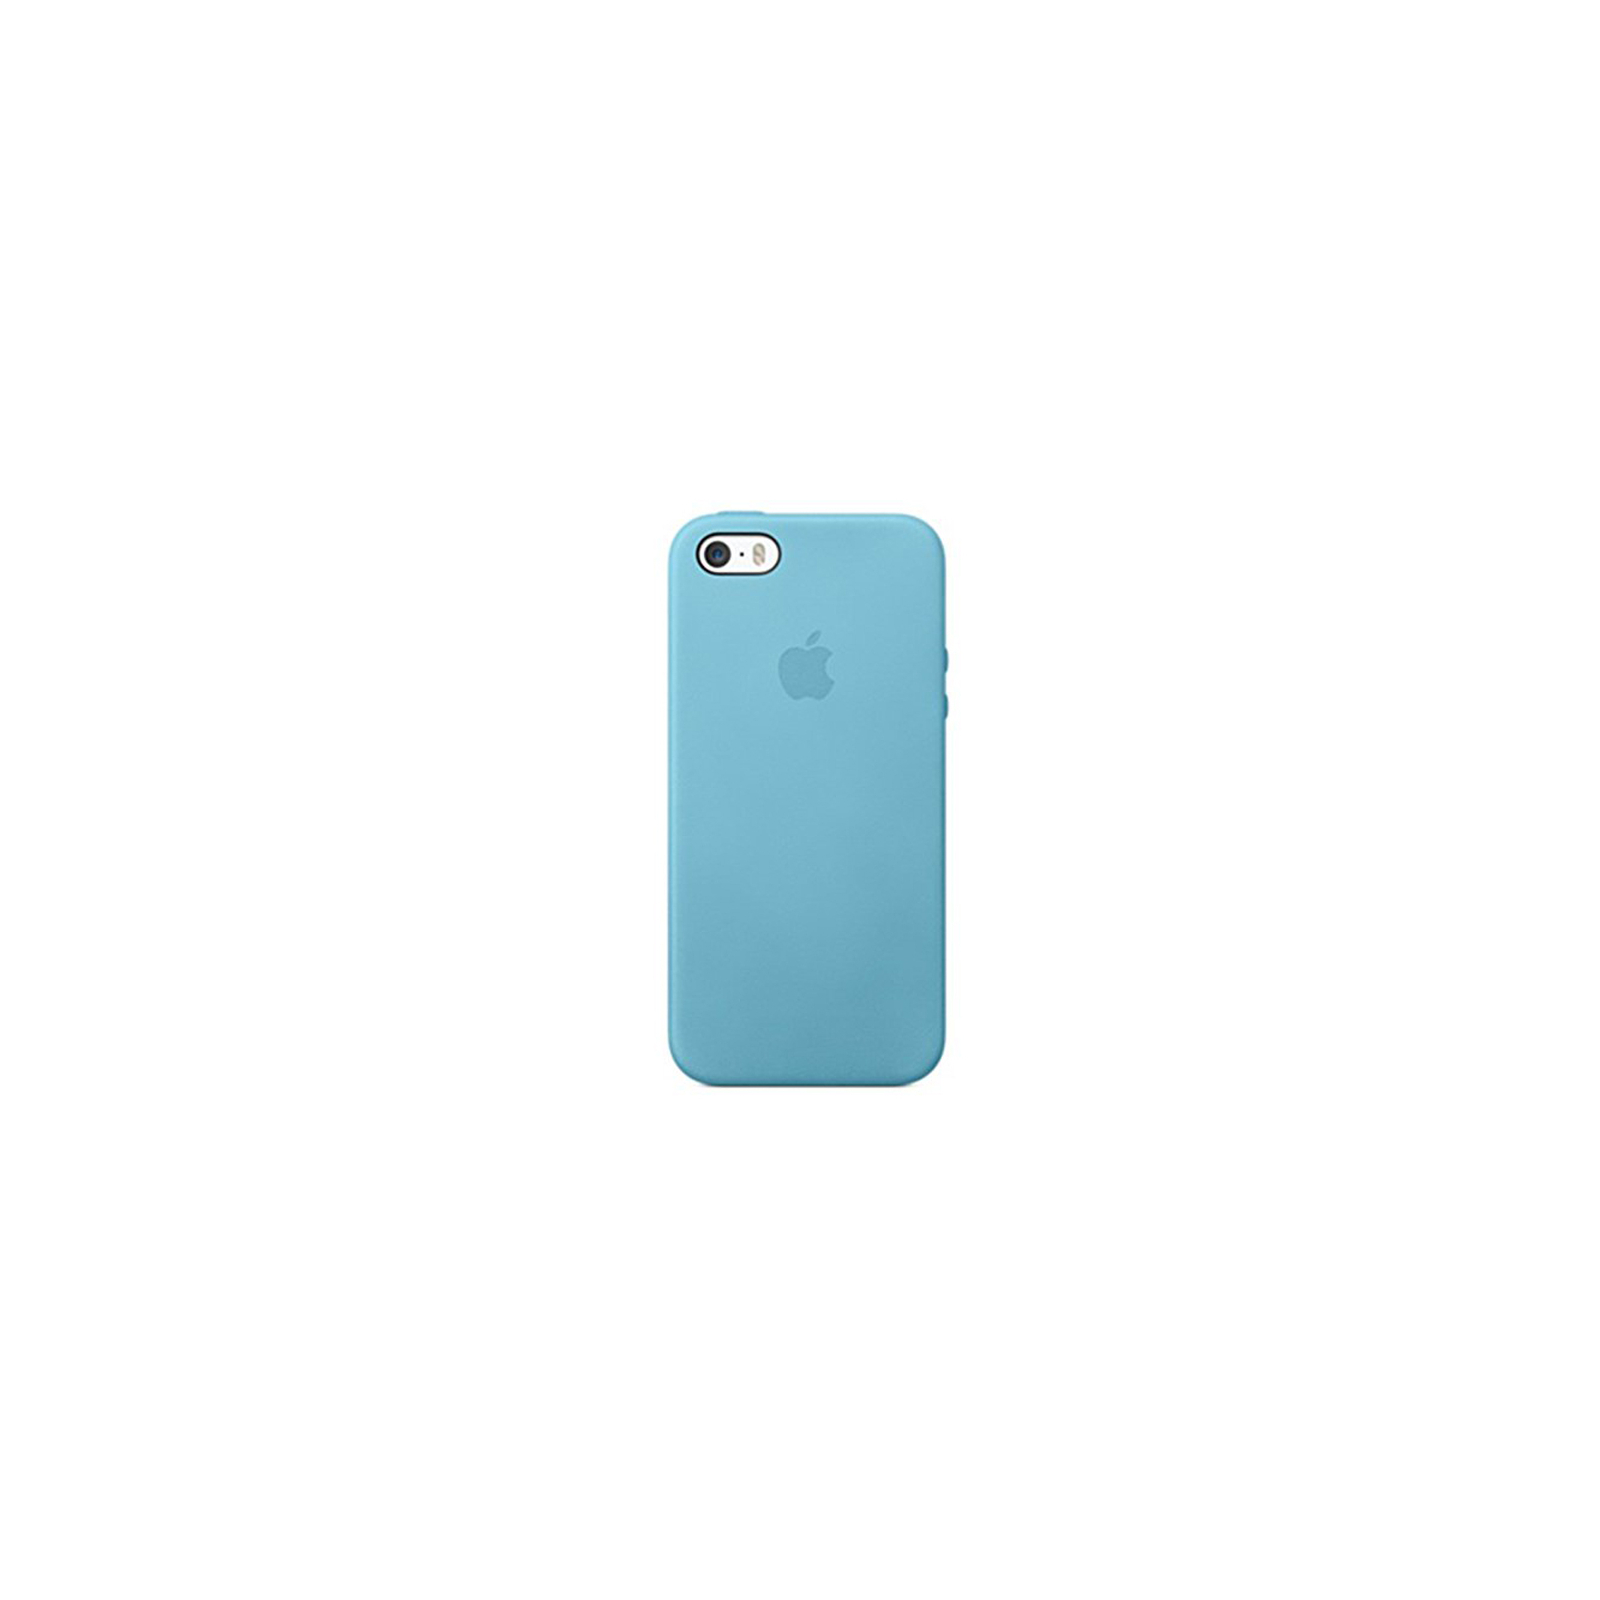 Чехол для мобильного телефона Apple для iPhone 5s синий (MF044ZM/A)